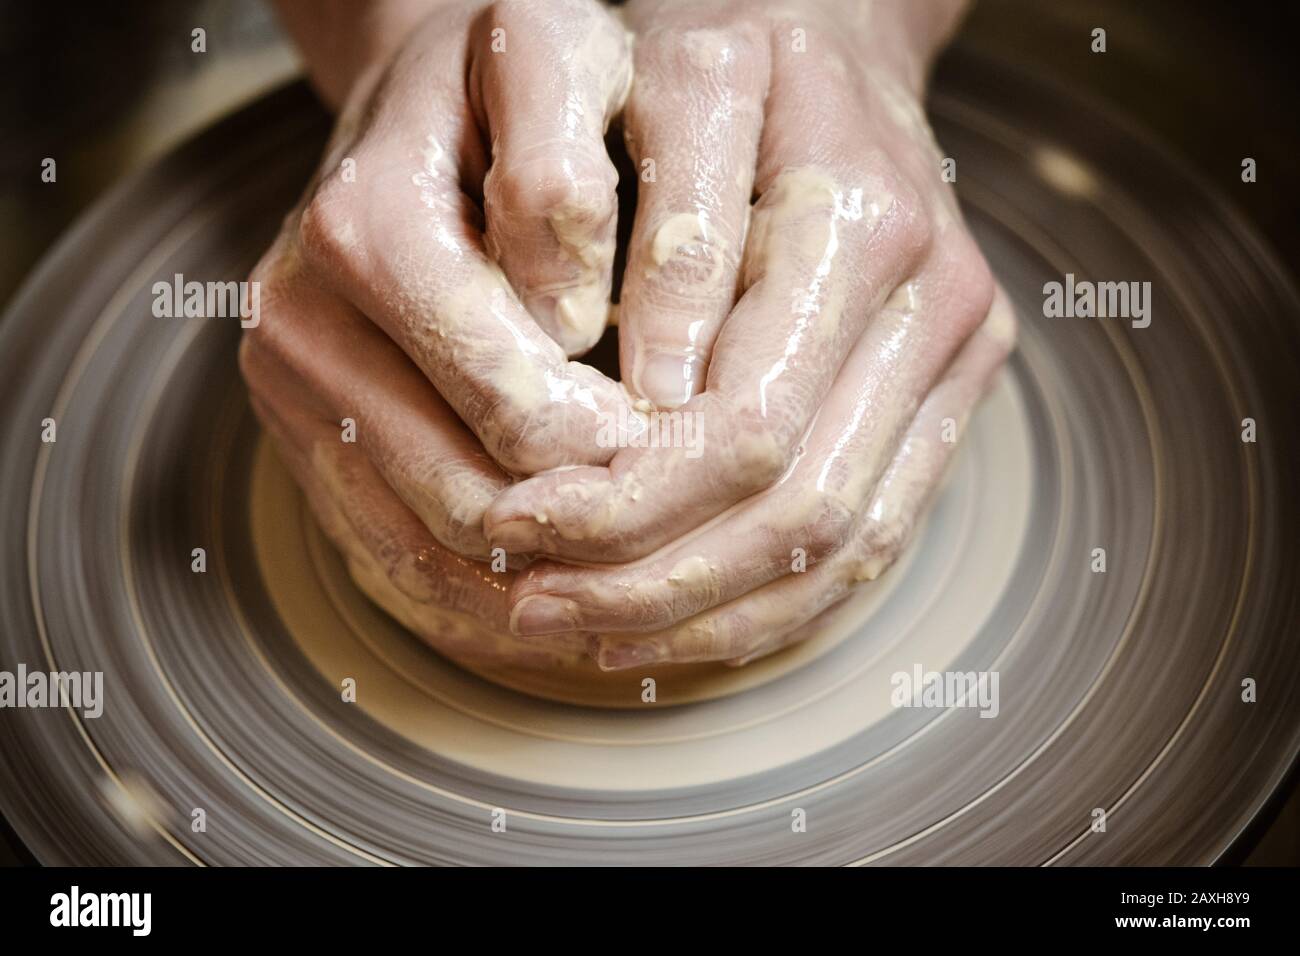 Man Making Pottery Art, Clay Work Close Up Hands Shot Stock Photo